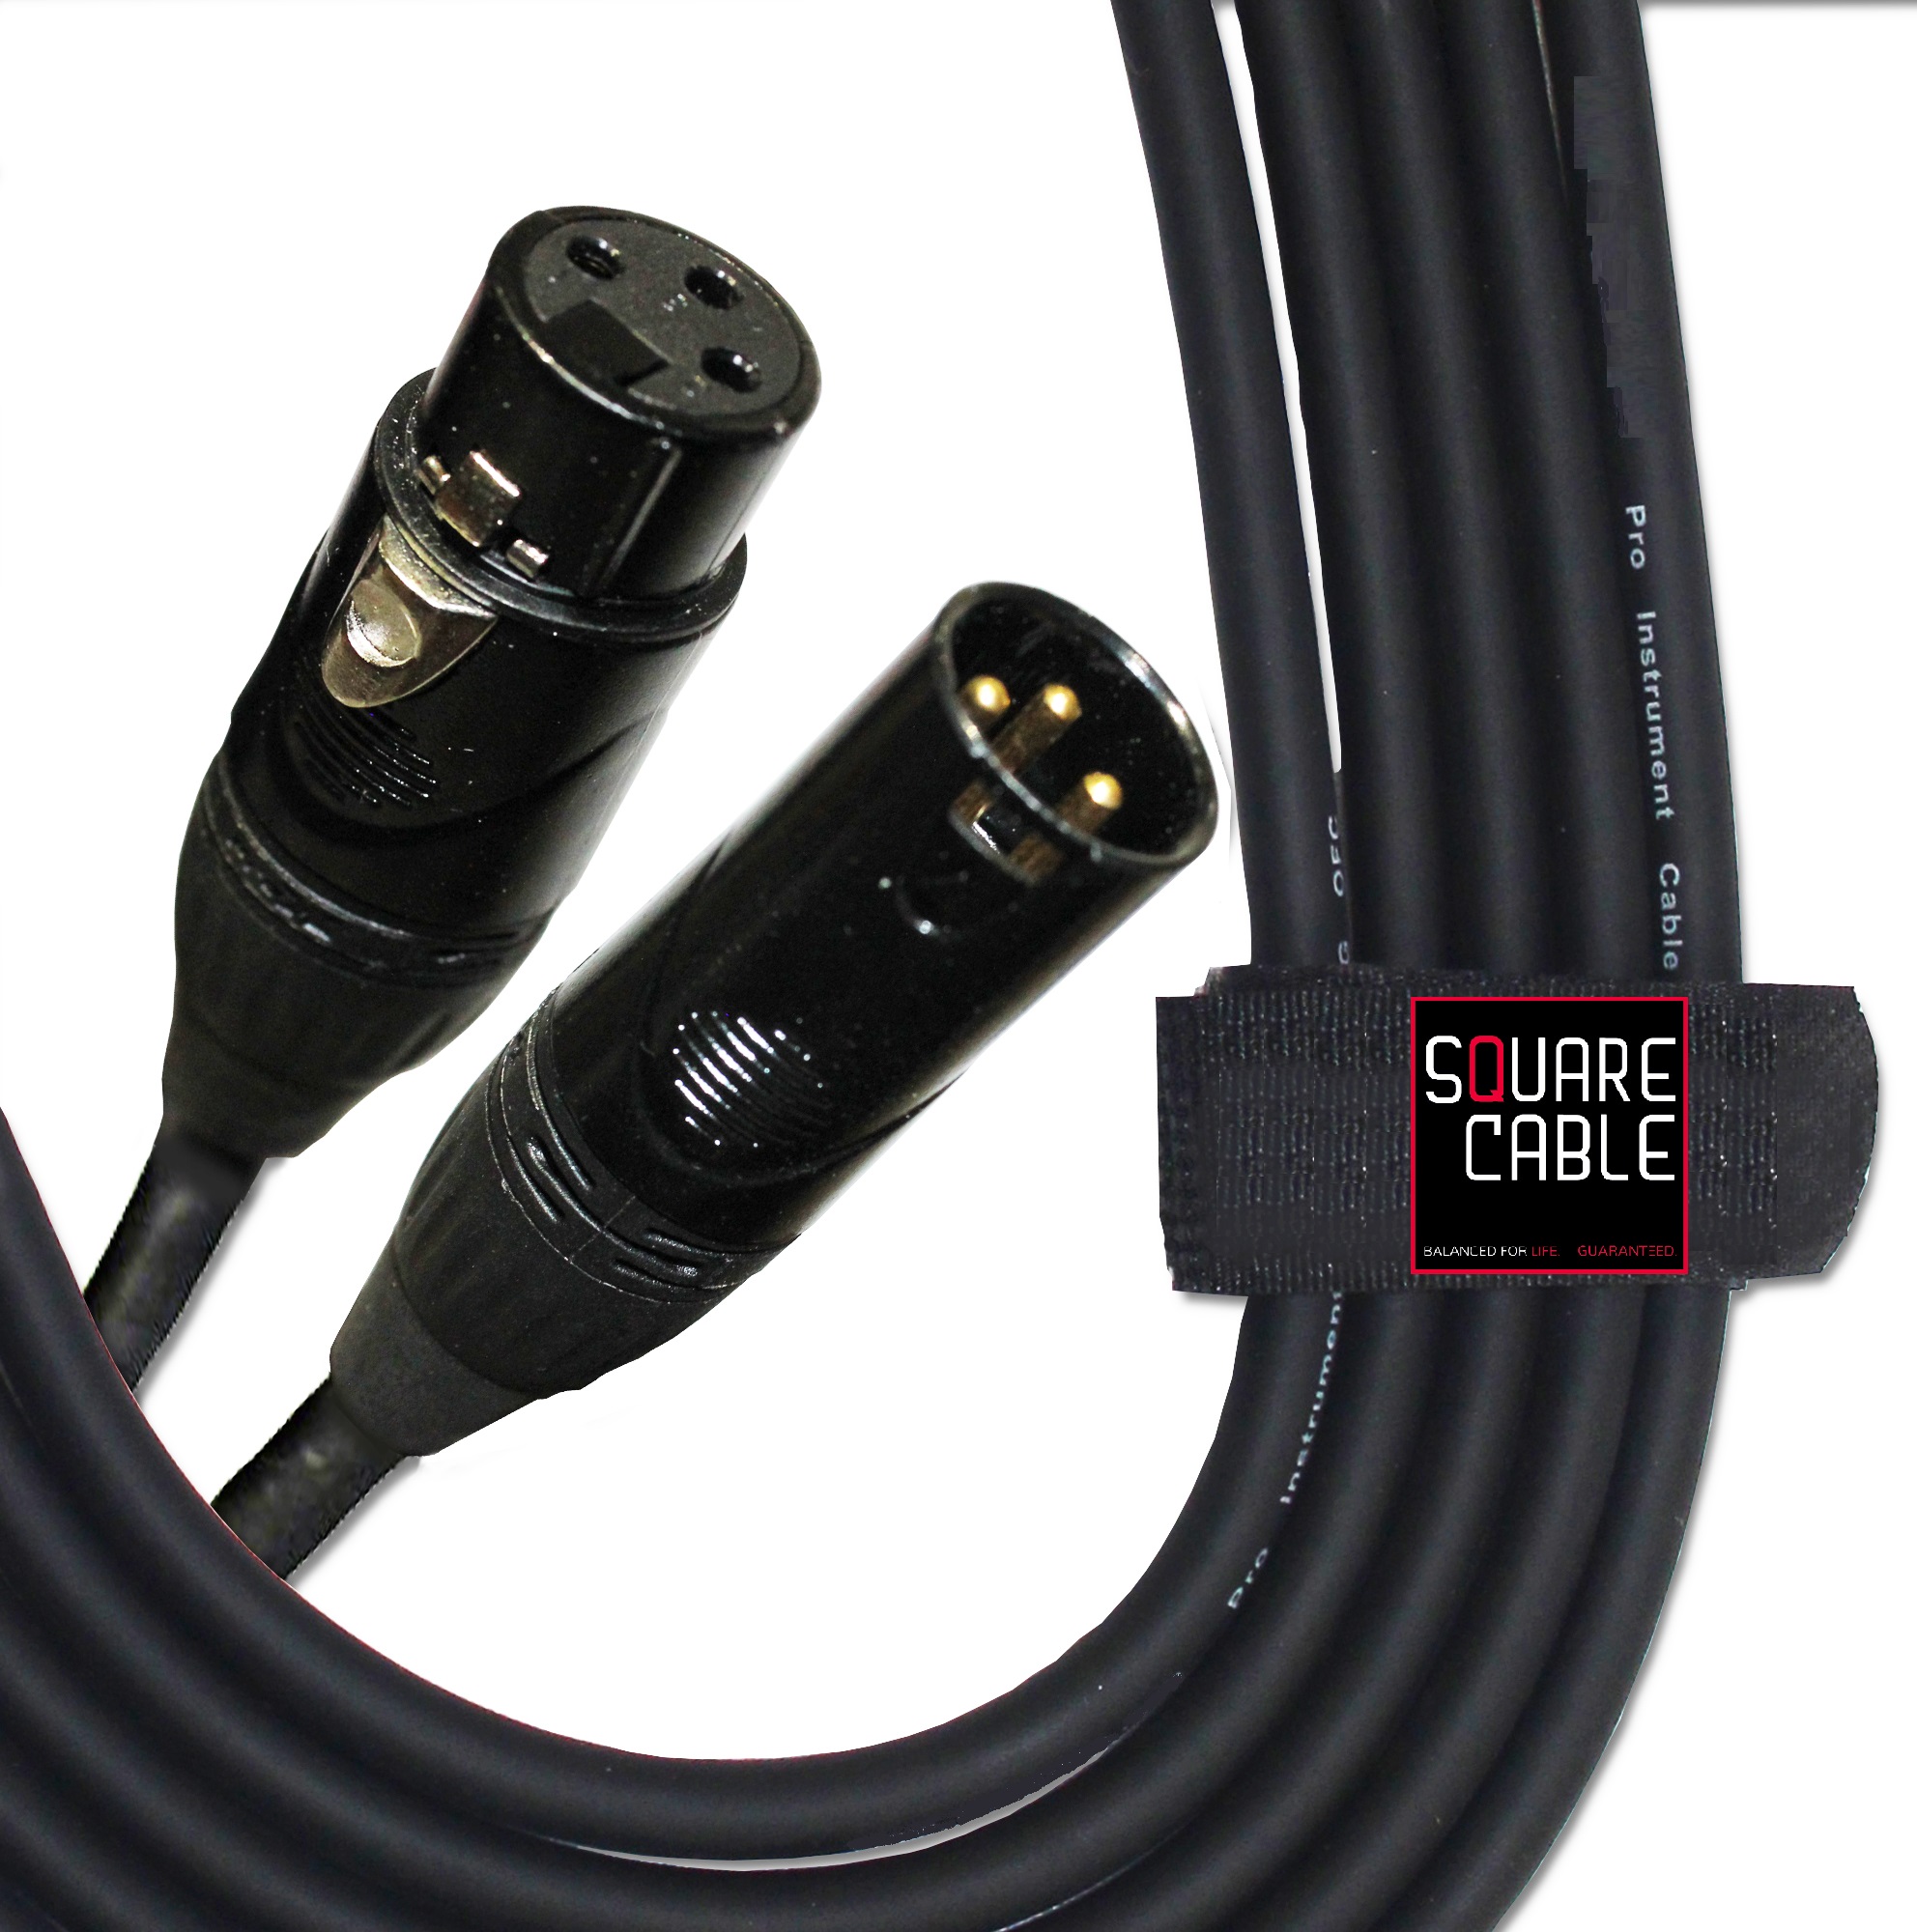 square-cable-xlr-10--10ft-xlr-to-xlr-cable.jpg